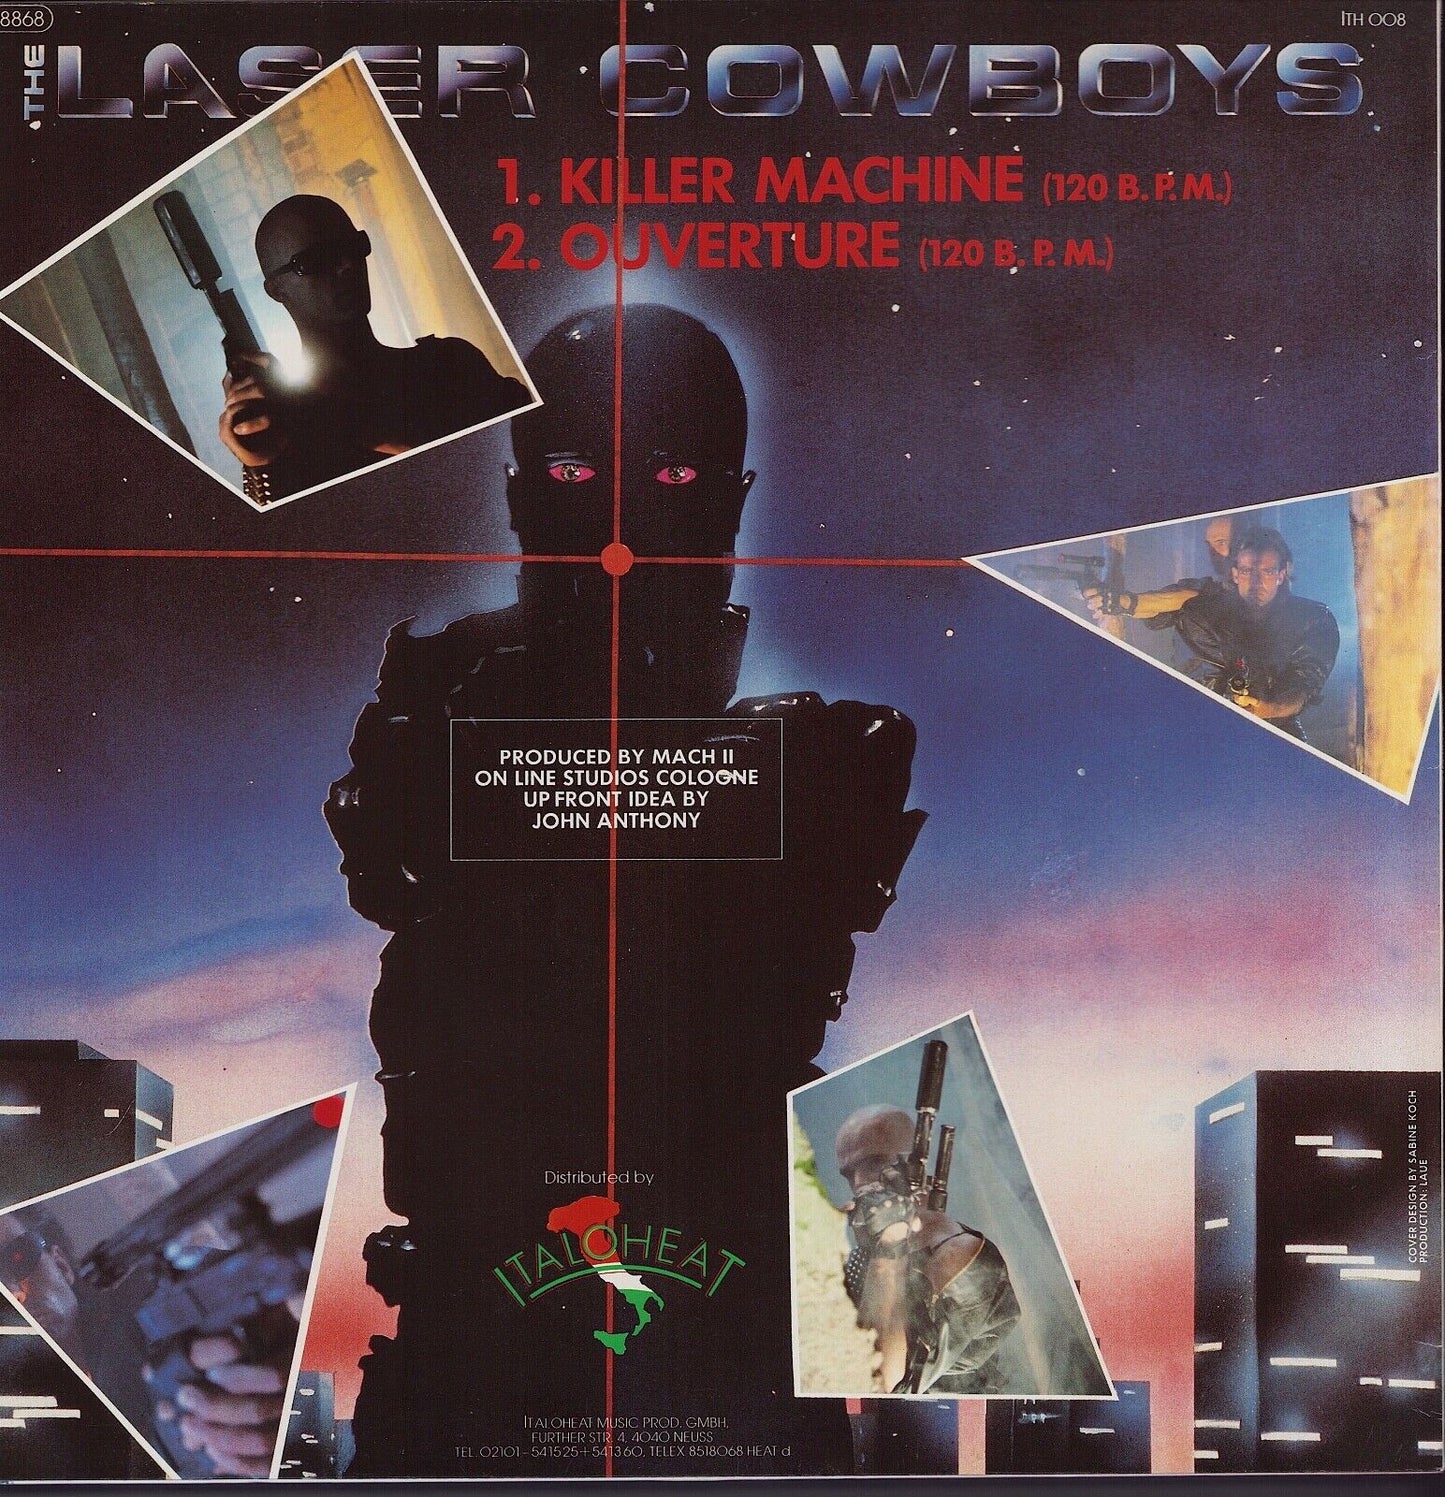 The Laser Cowboys - Killer Machine Vinyl 12"